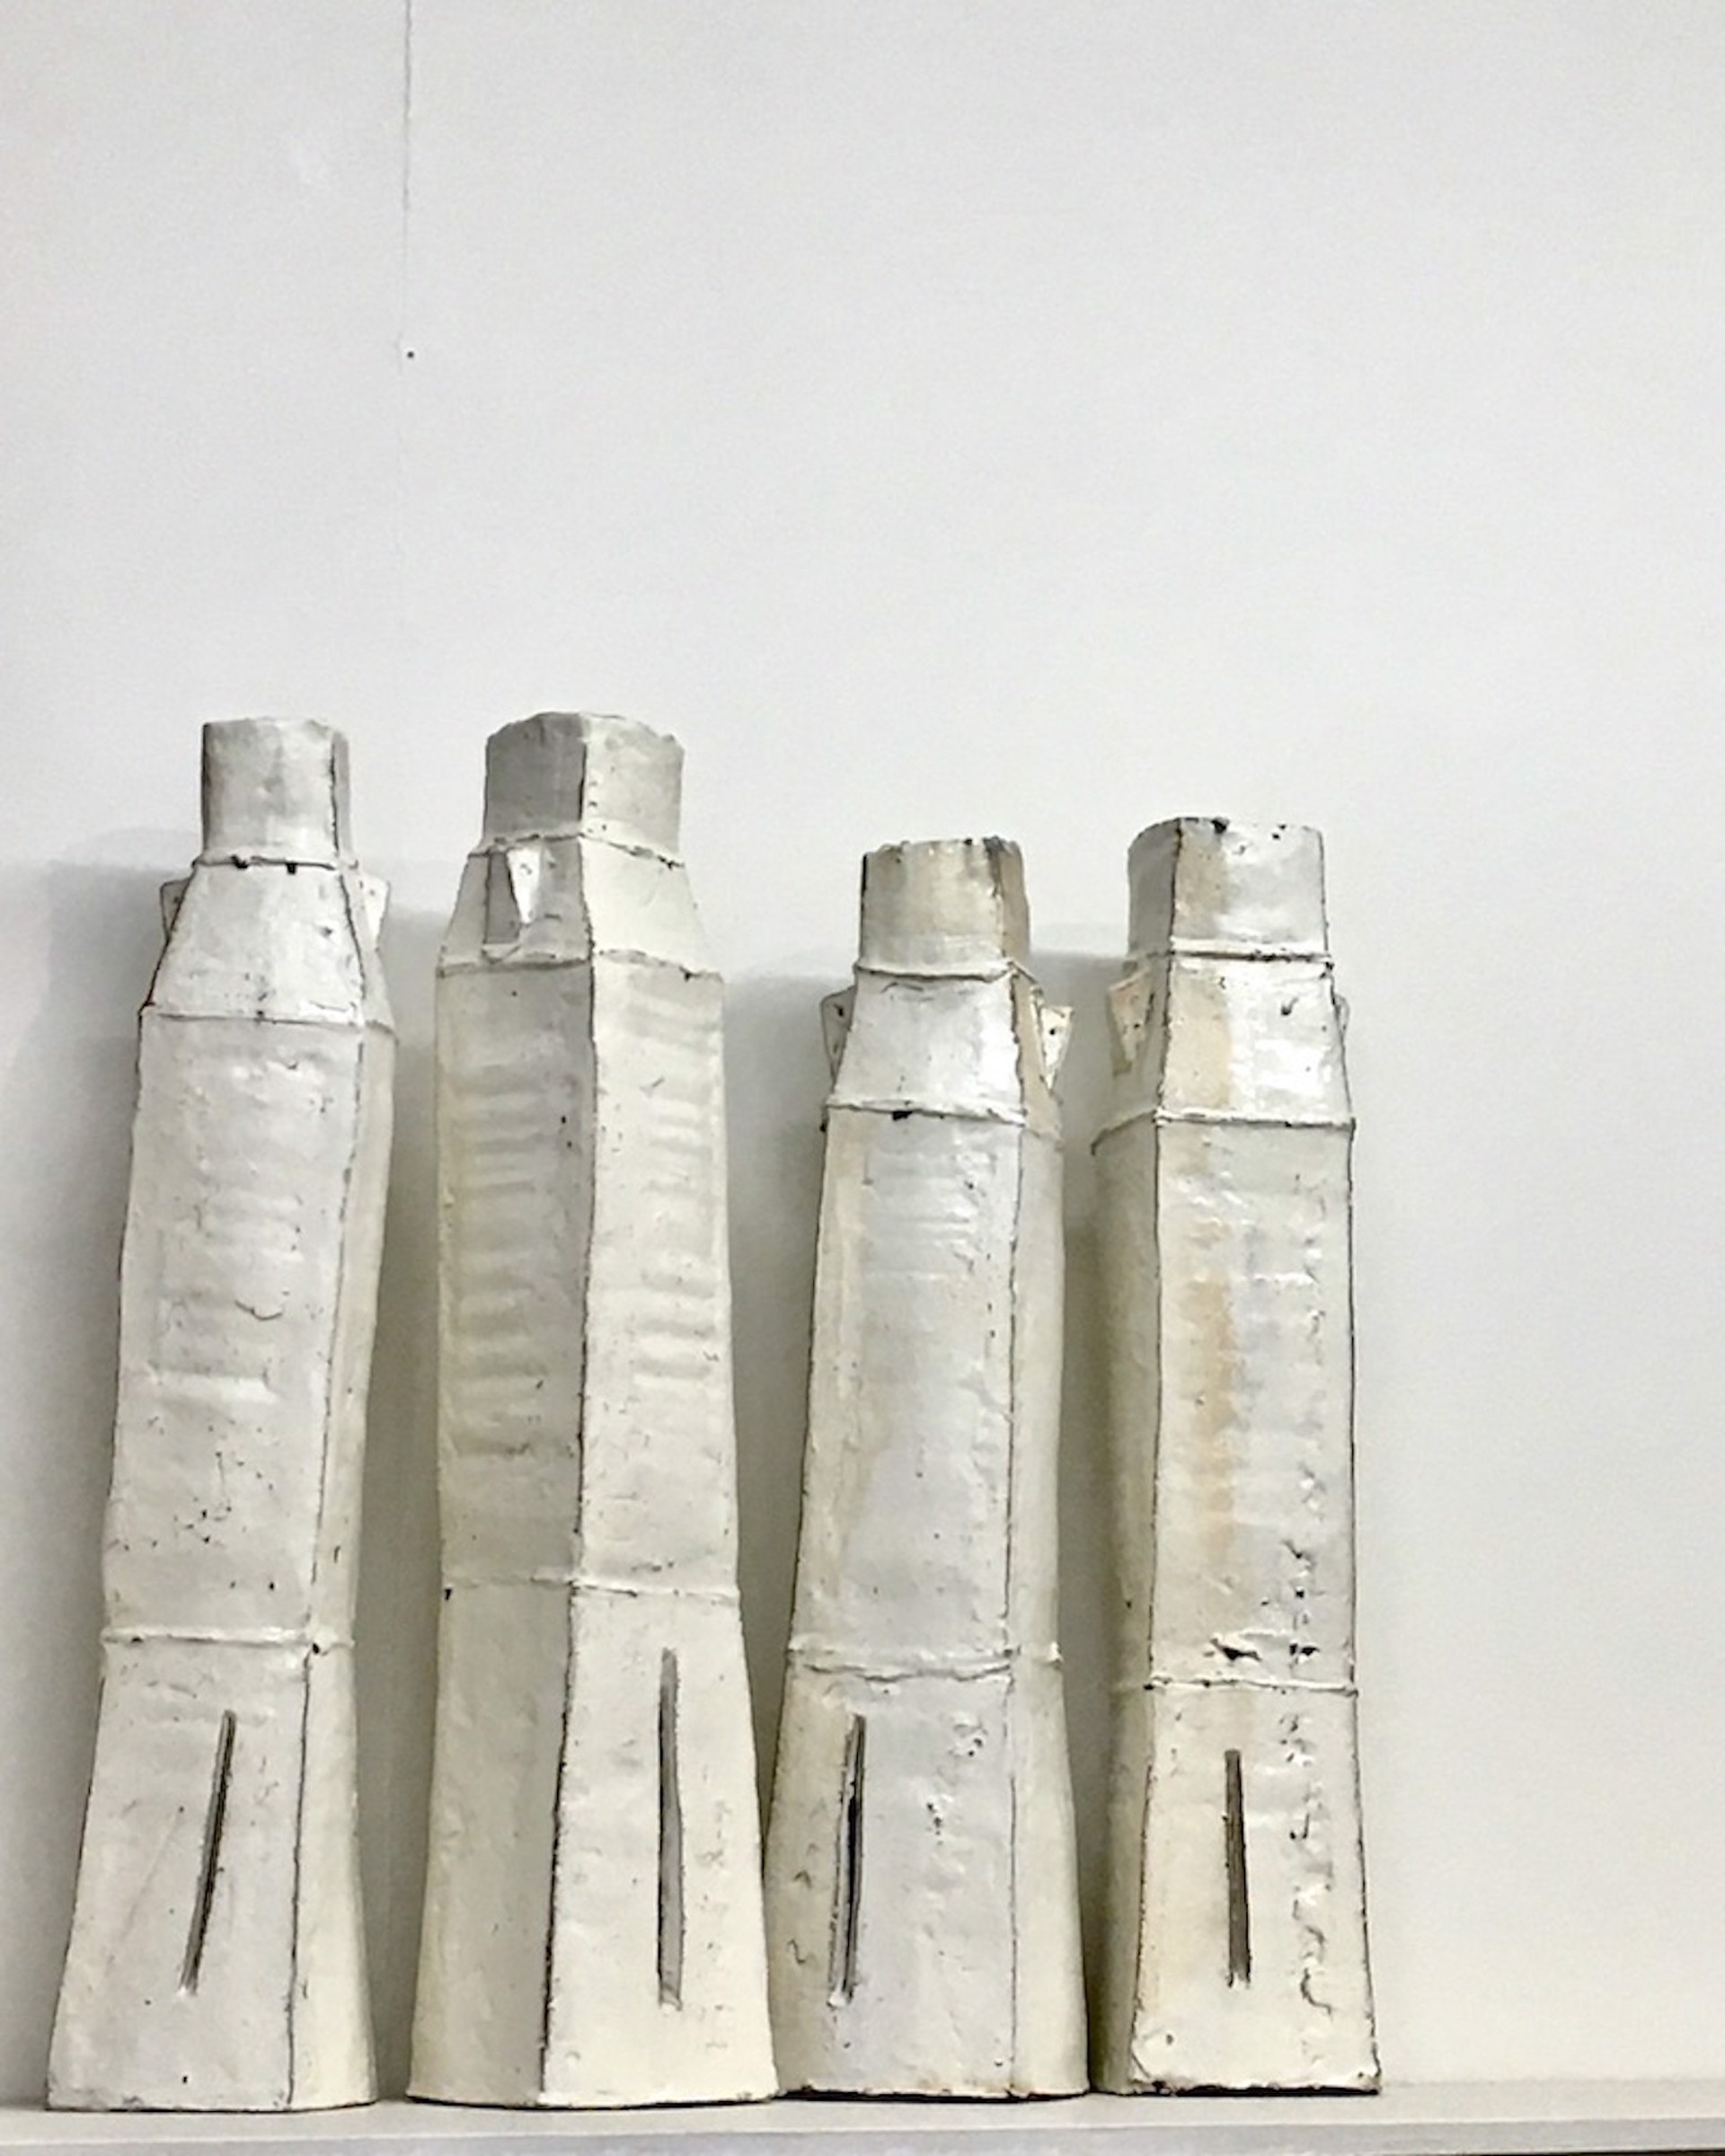 Group of Pillar Bottles by Jason Hartsoe